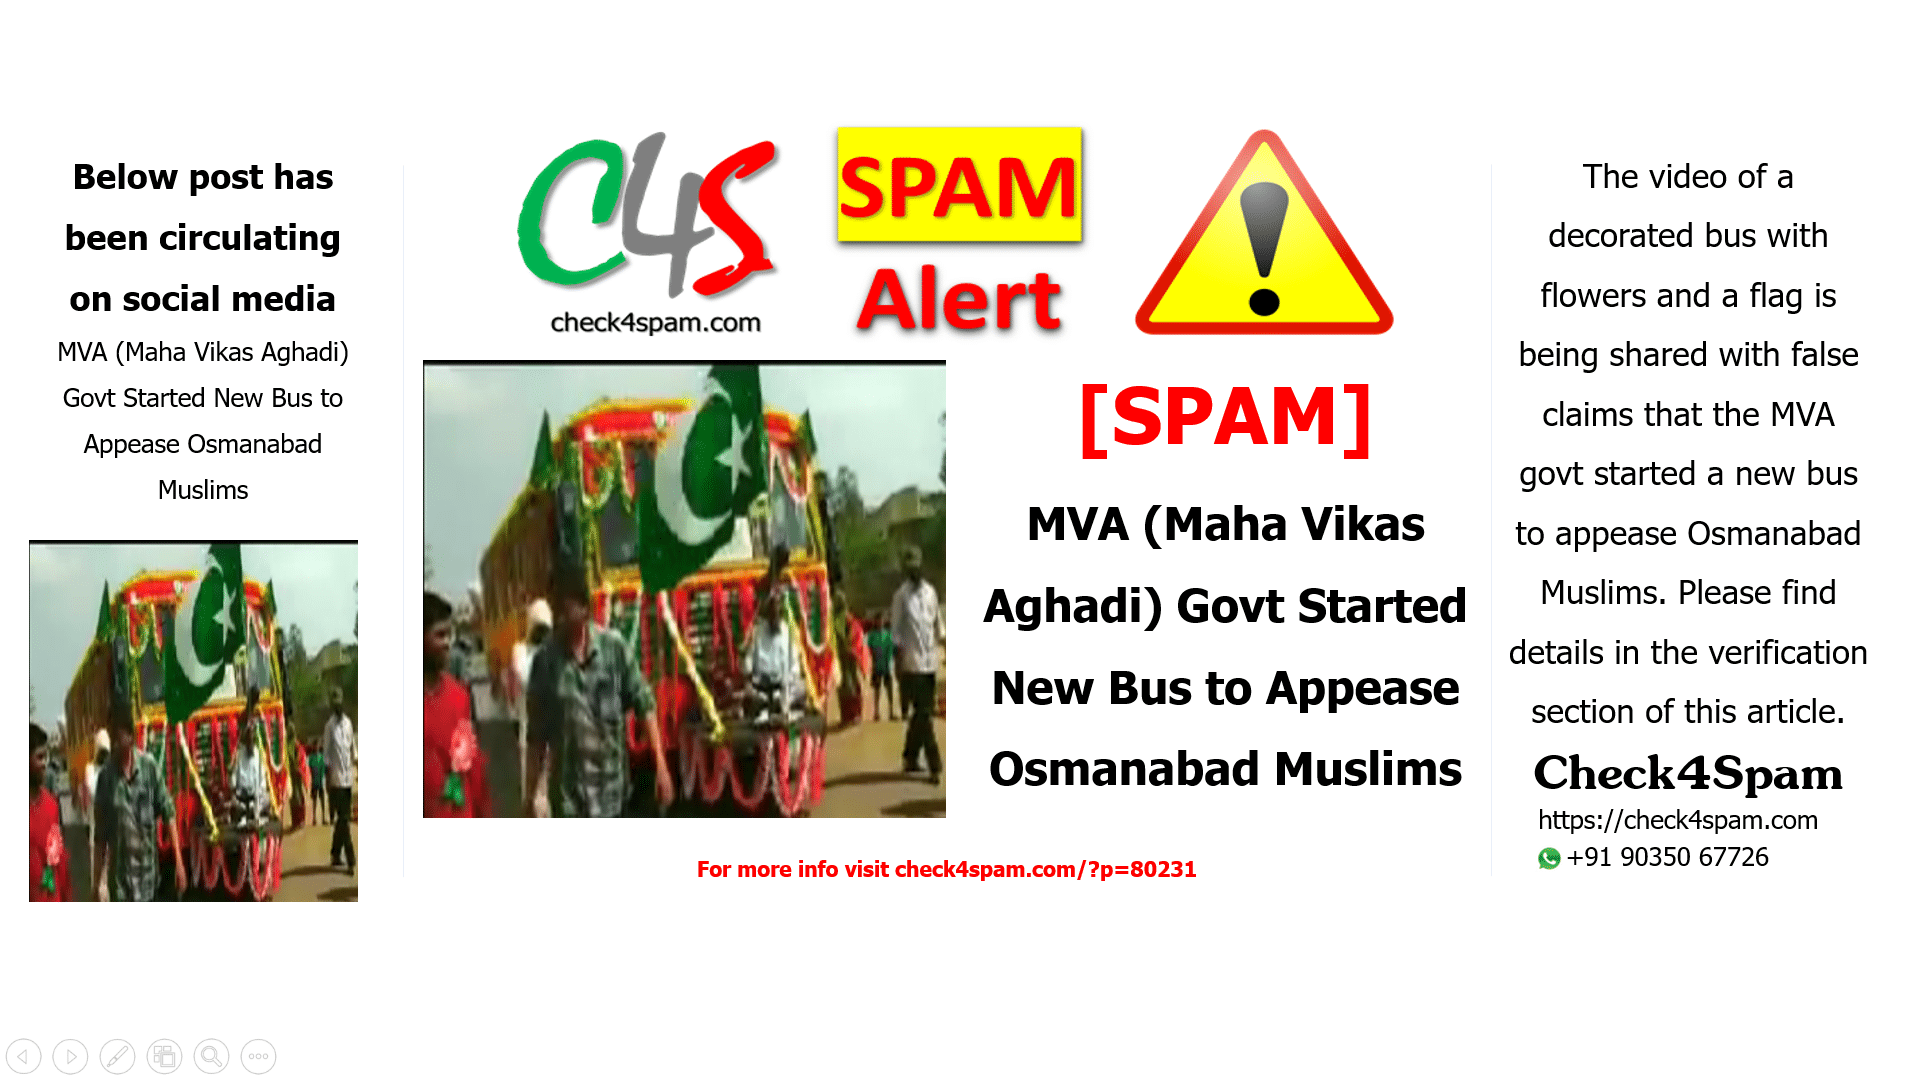 MVA (Maha Vikas Aghadi) Govt Started New Bus to Appease Osmanabad Muslims